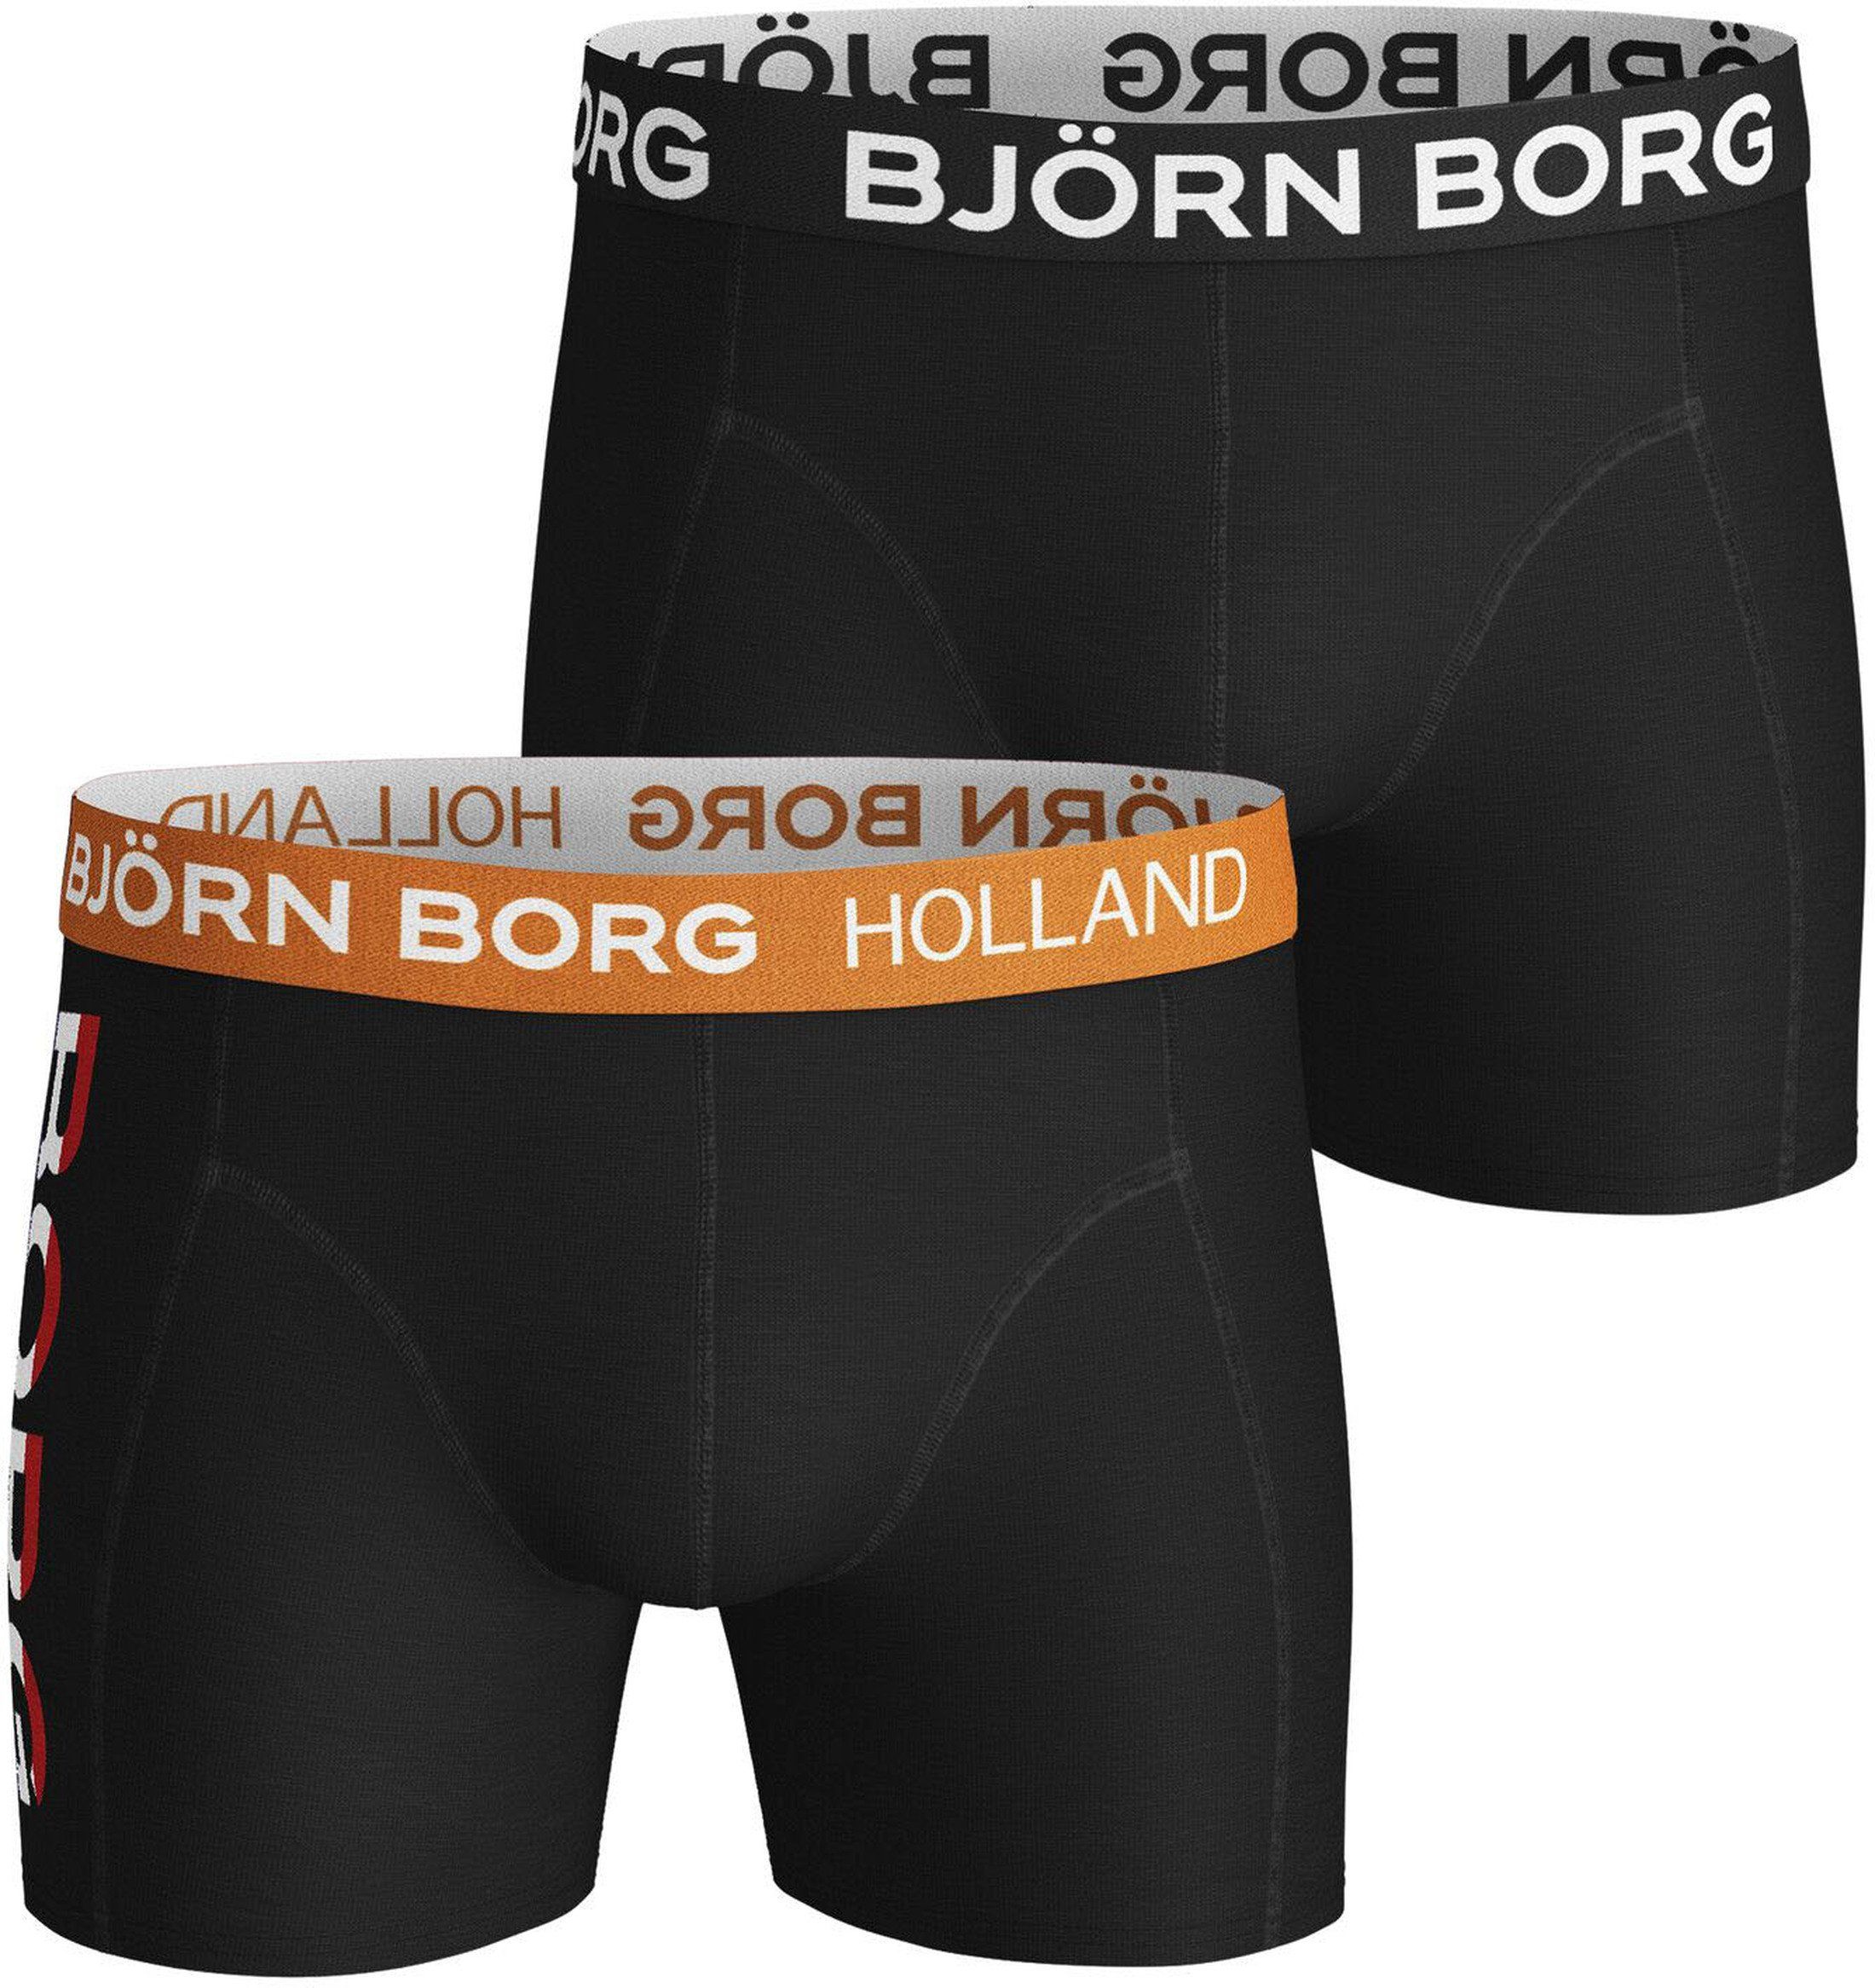 Bjorn Borg Boxer Shorts 2-Pack Holland Black size M